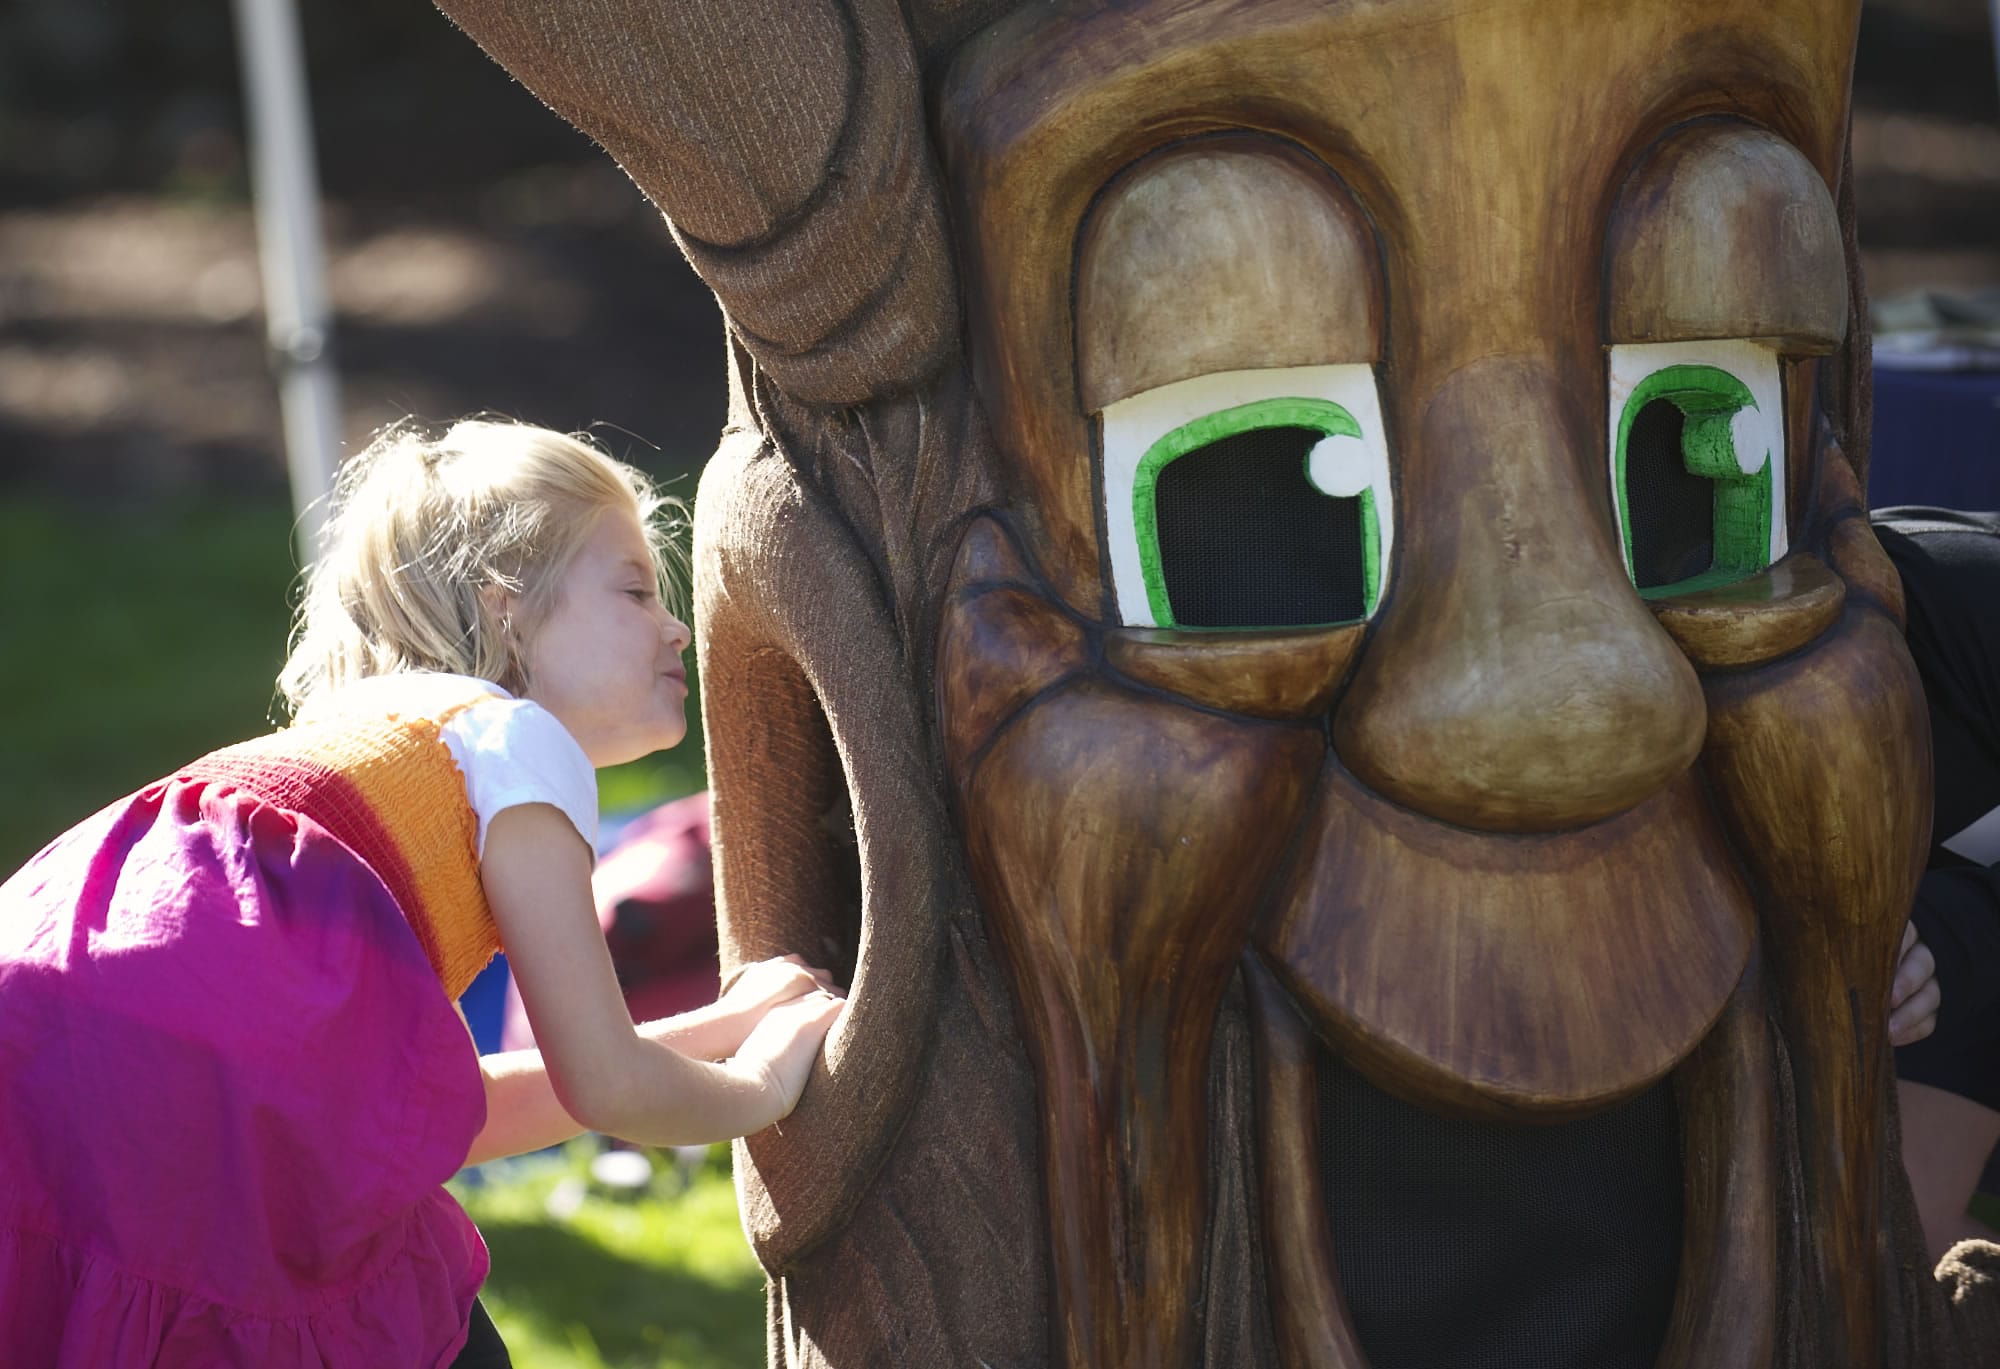 Old Apple Tree Festival proceeds despite shutdown The Columbian